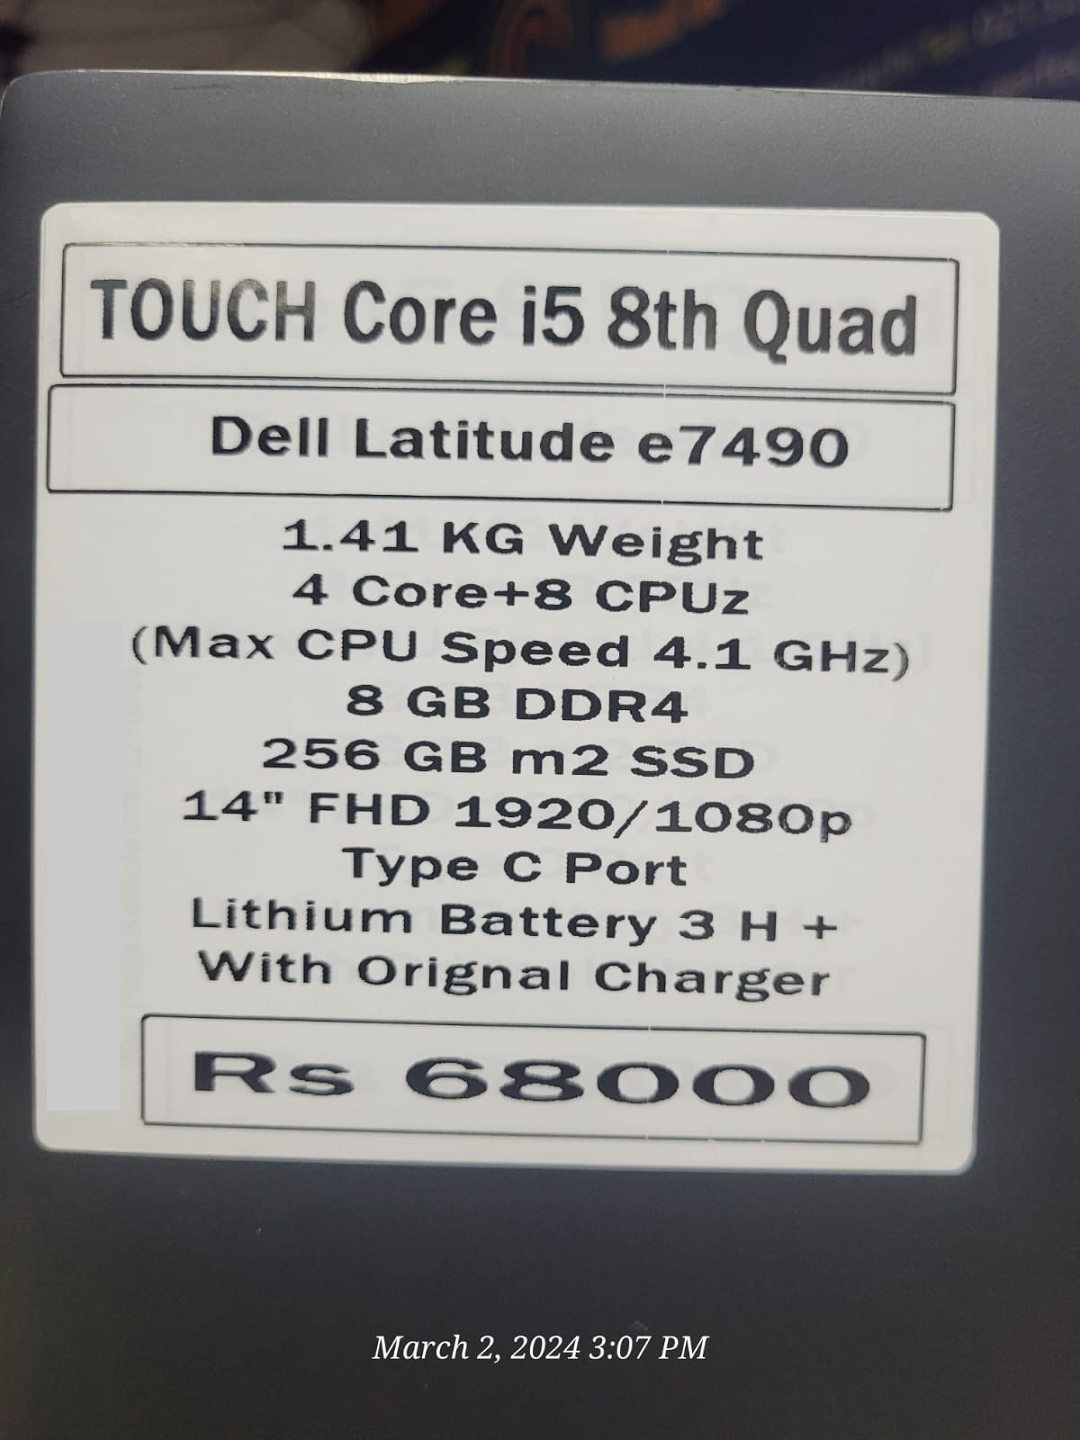 Dell latitude 7490 laptop price in pakistan